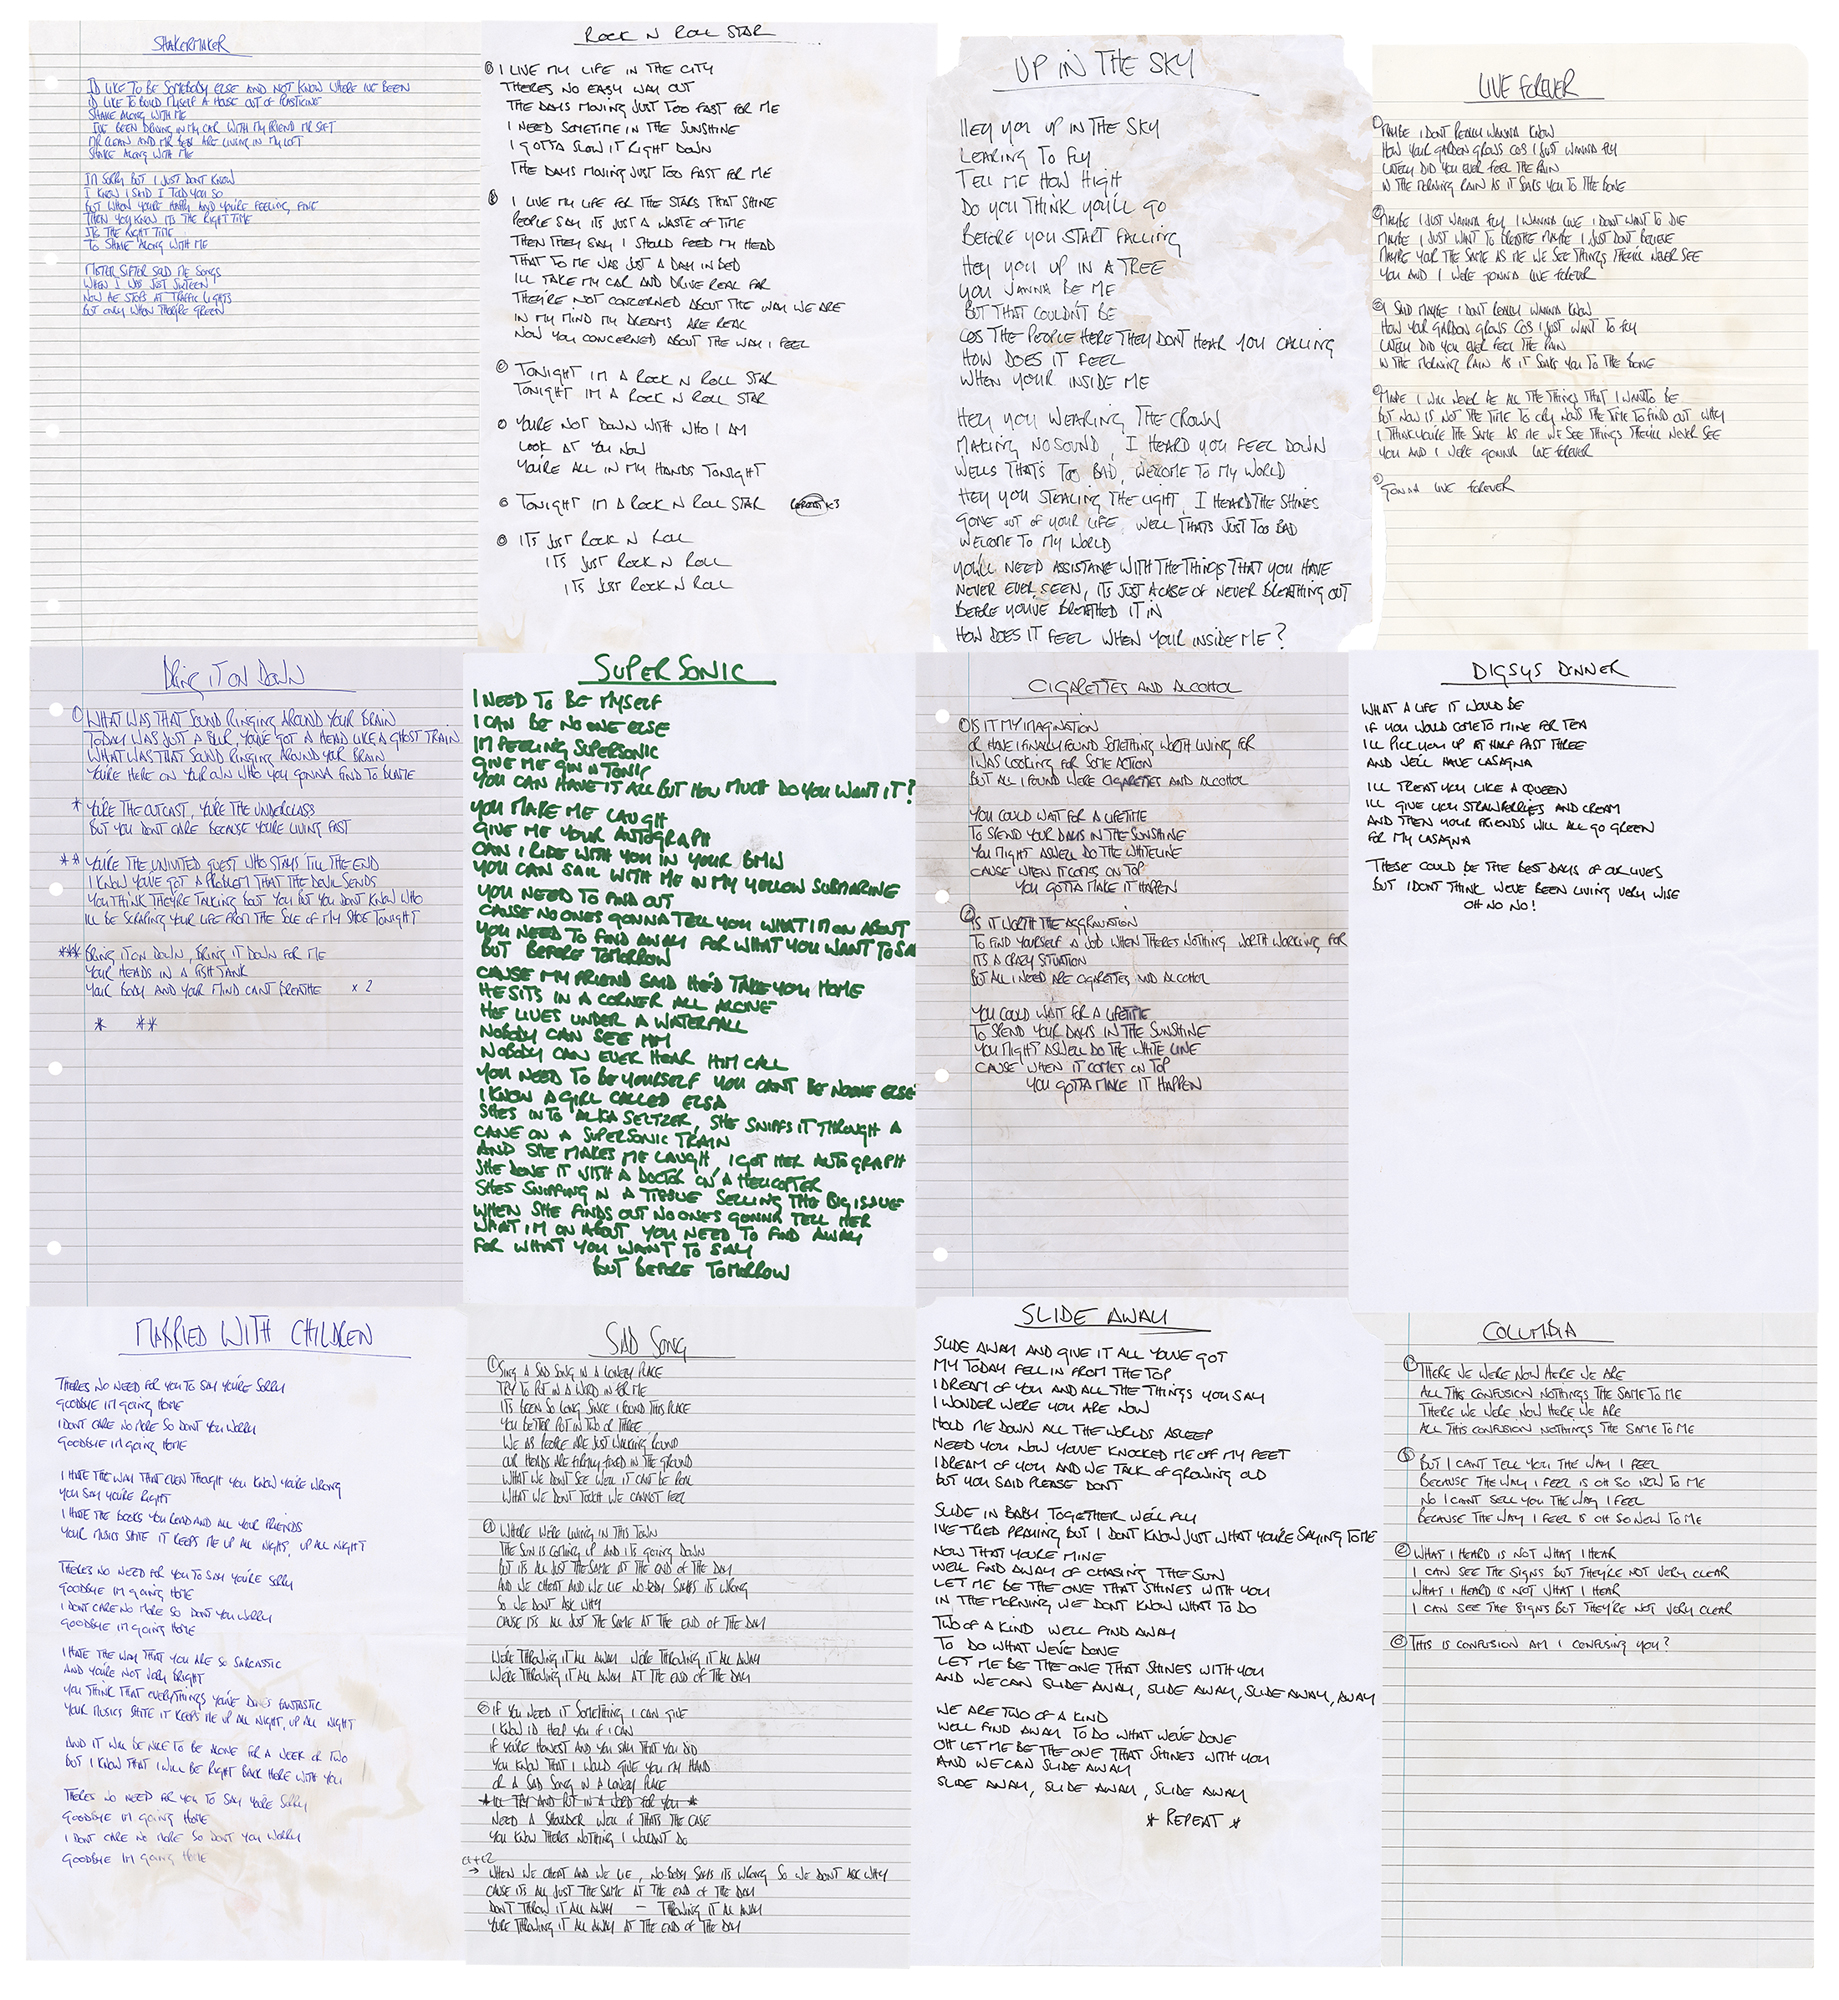 Lot #8051 Oasis: Noel Gallagher Handwritten Lyrics for Definitely Maybe